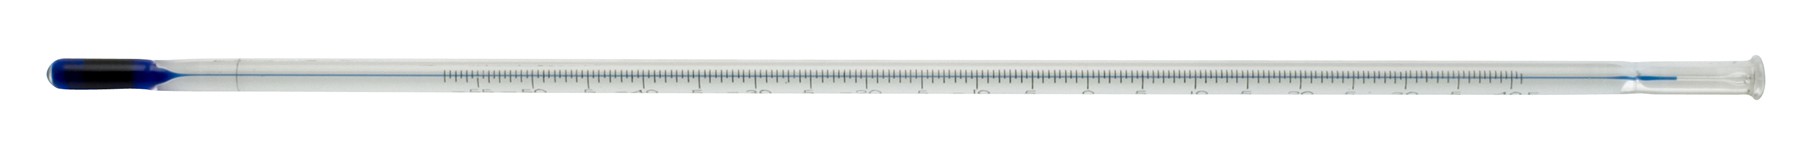 H-B DURAC Plus ASTM Like Liquid-In-Glass Thermometer; 14F / Wax Melting Point, 79mm Immersion, 100 to 180F, Organic Liquid Fill